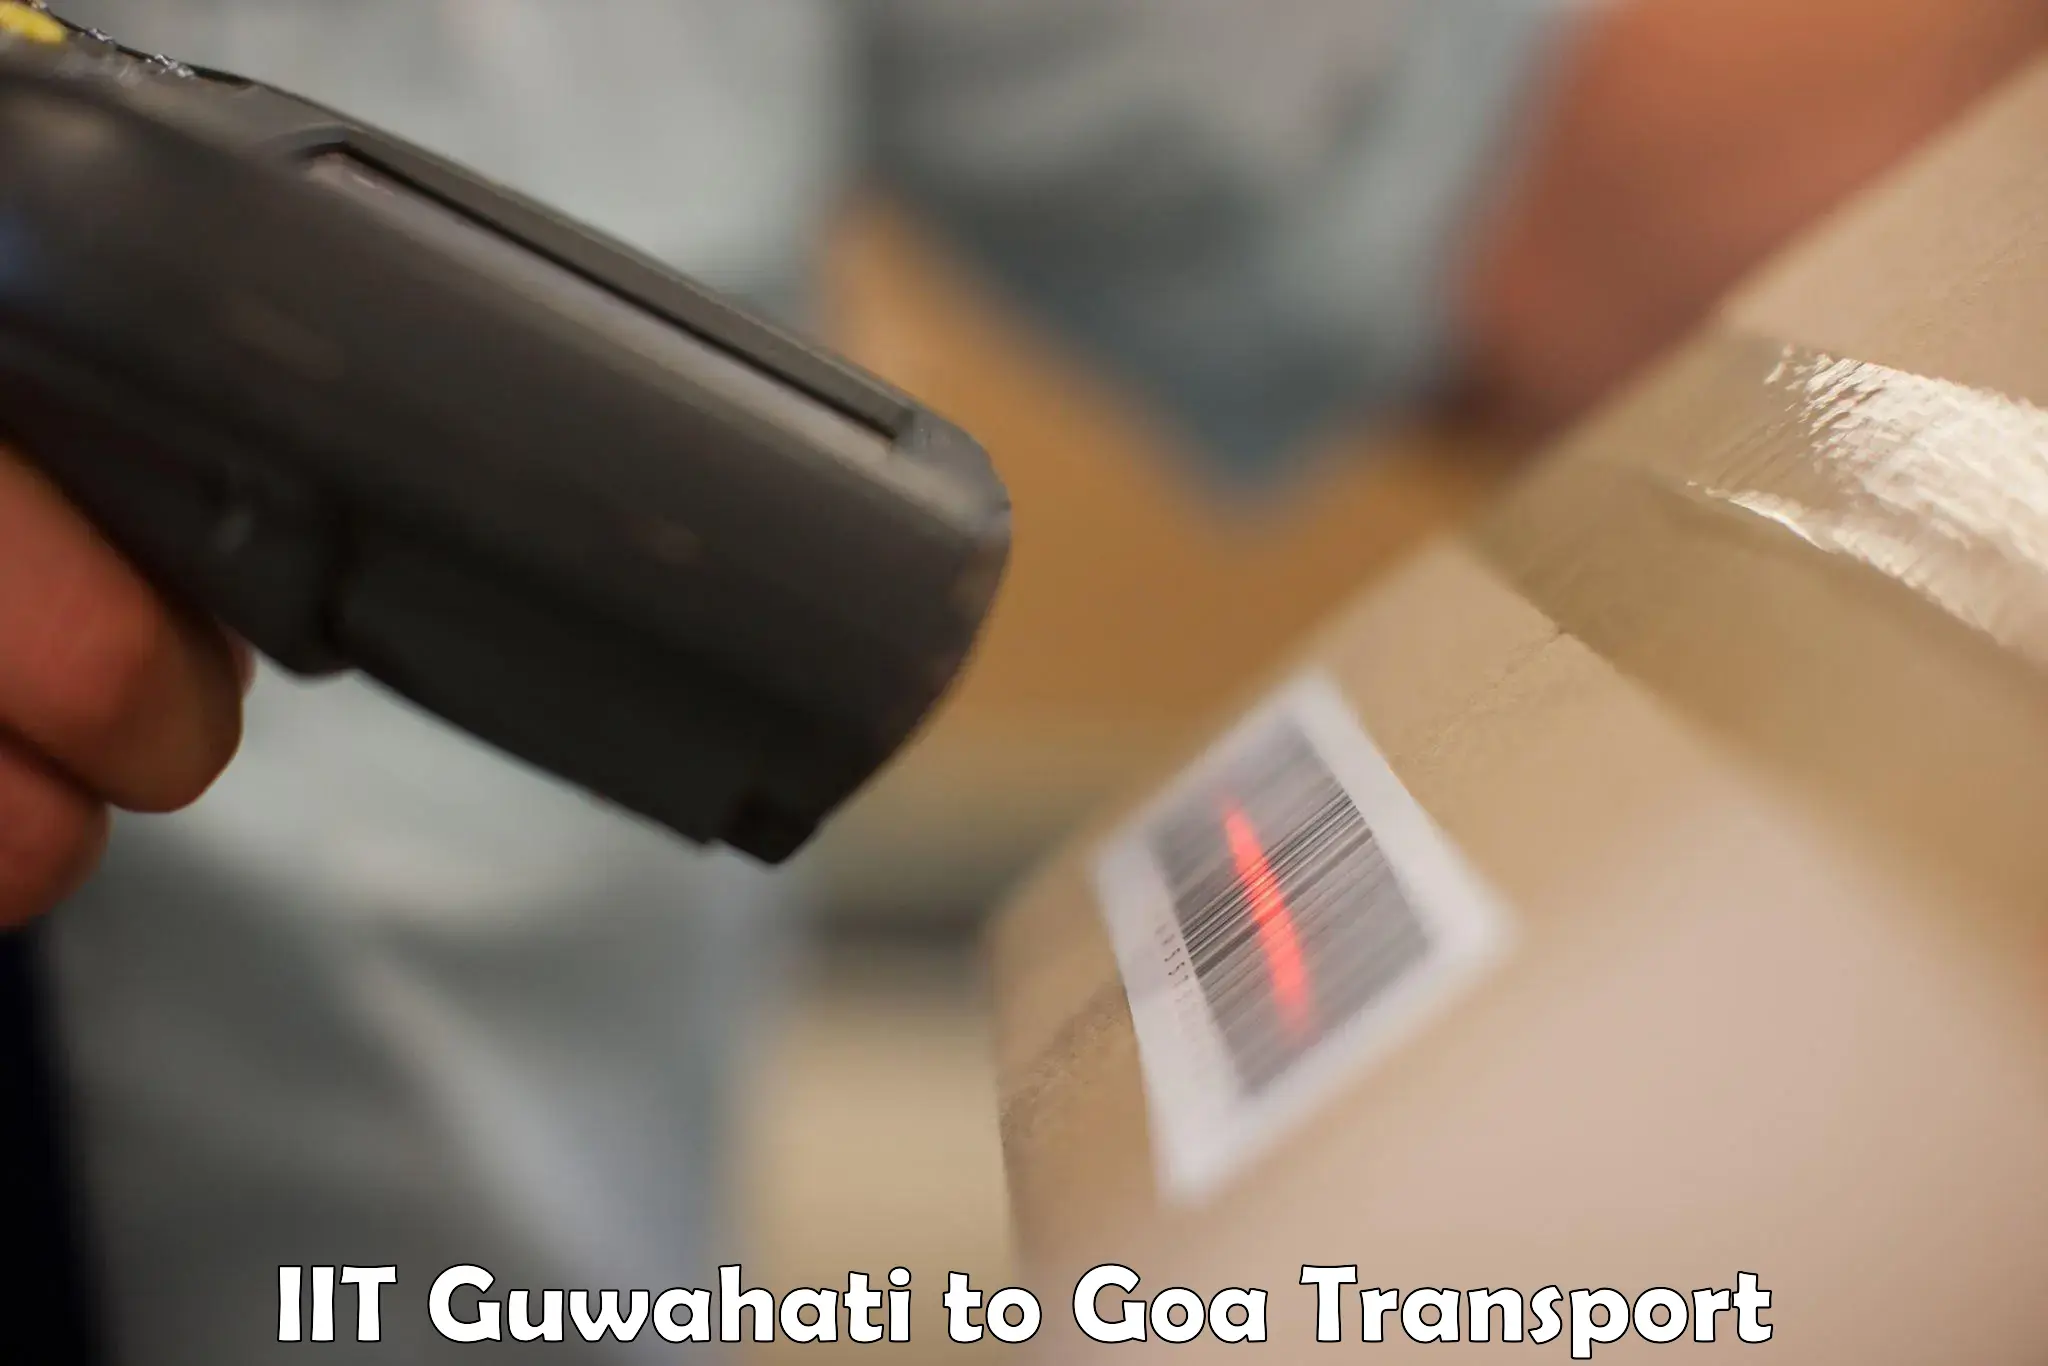 Cycle transportation service IIT Guwahati to Goa